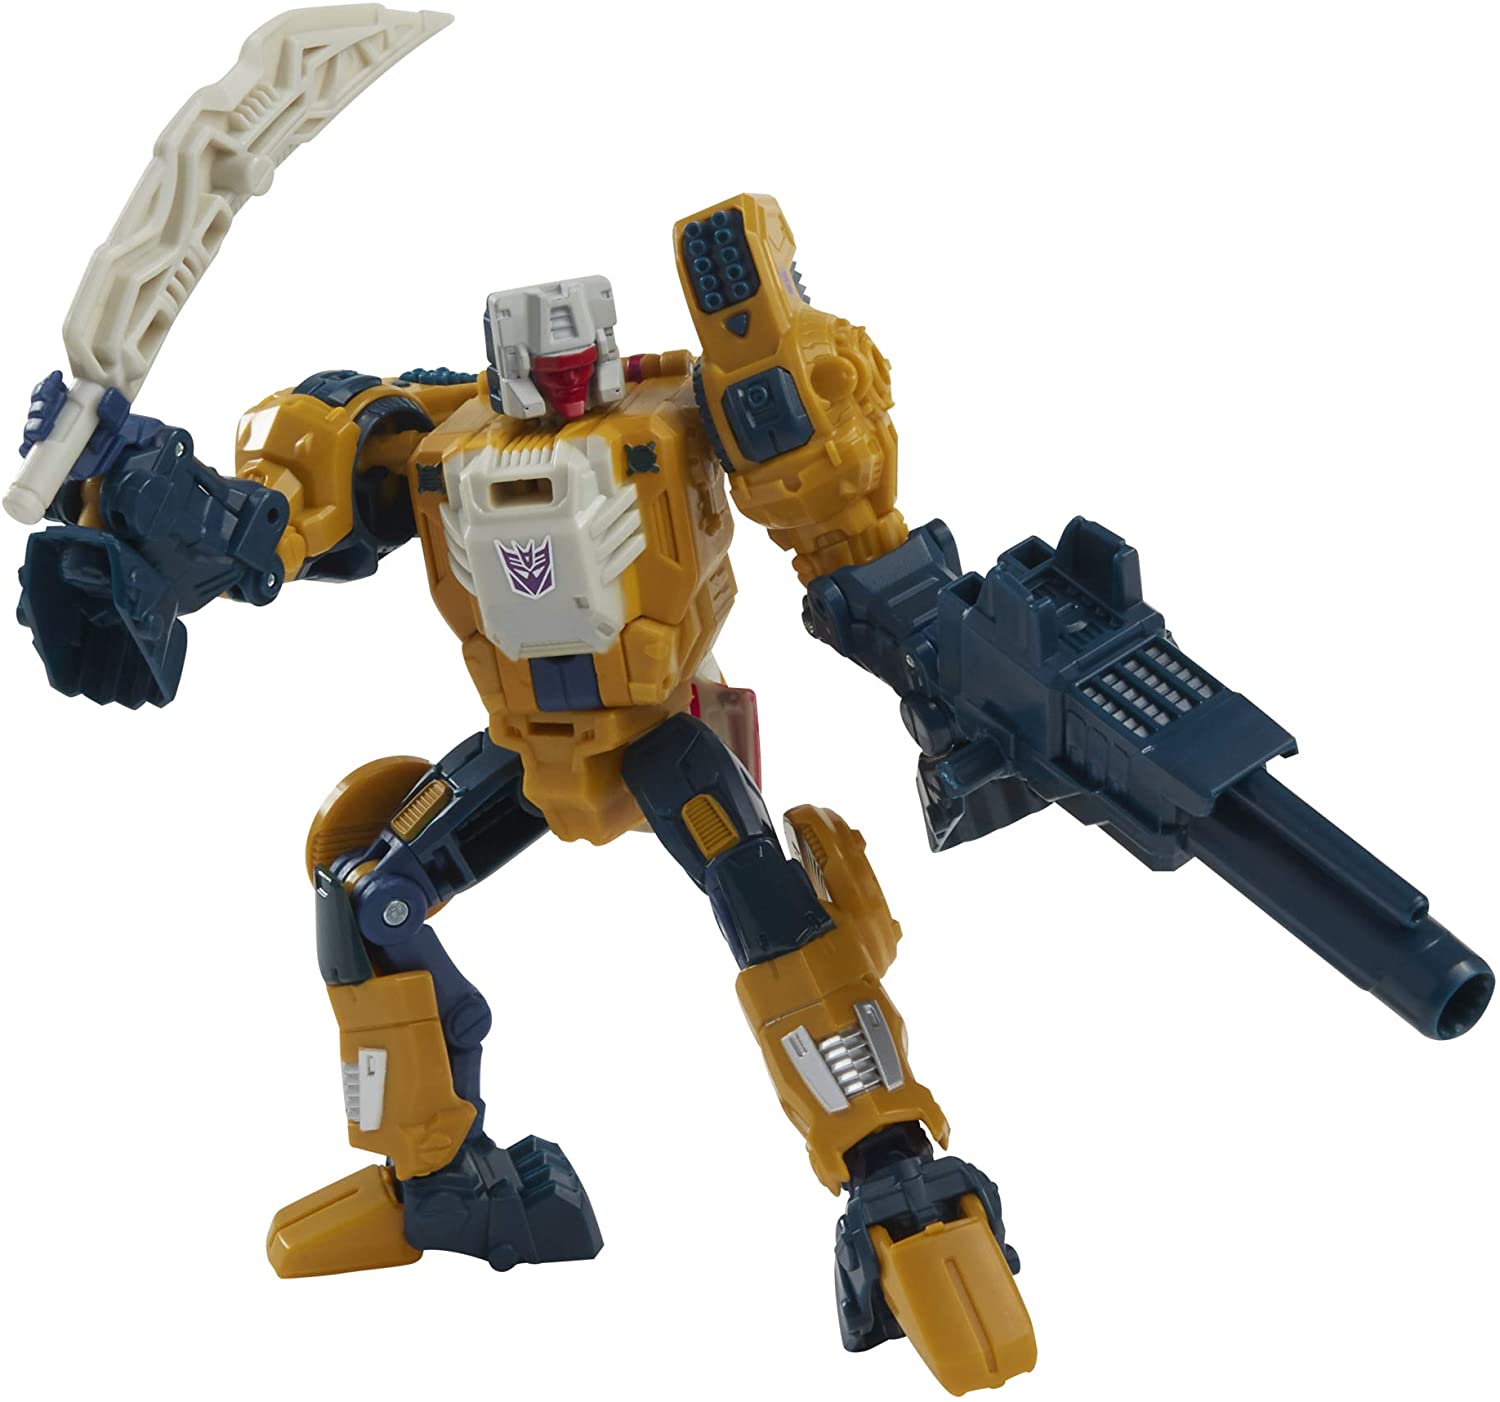 Transformers G1 Retro Deluxe Headmaster Weirdwolf Action Figure